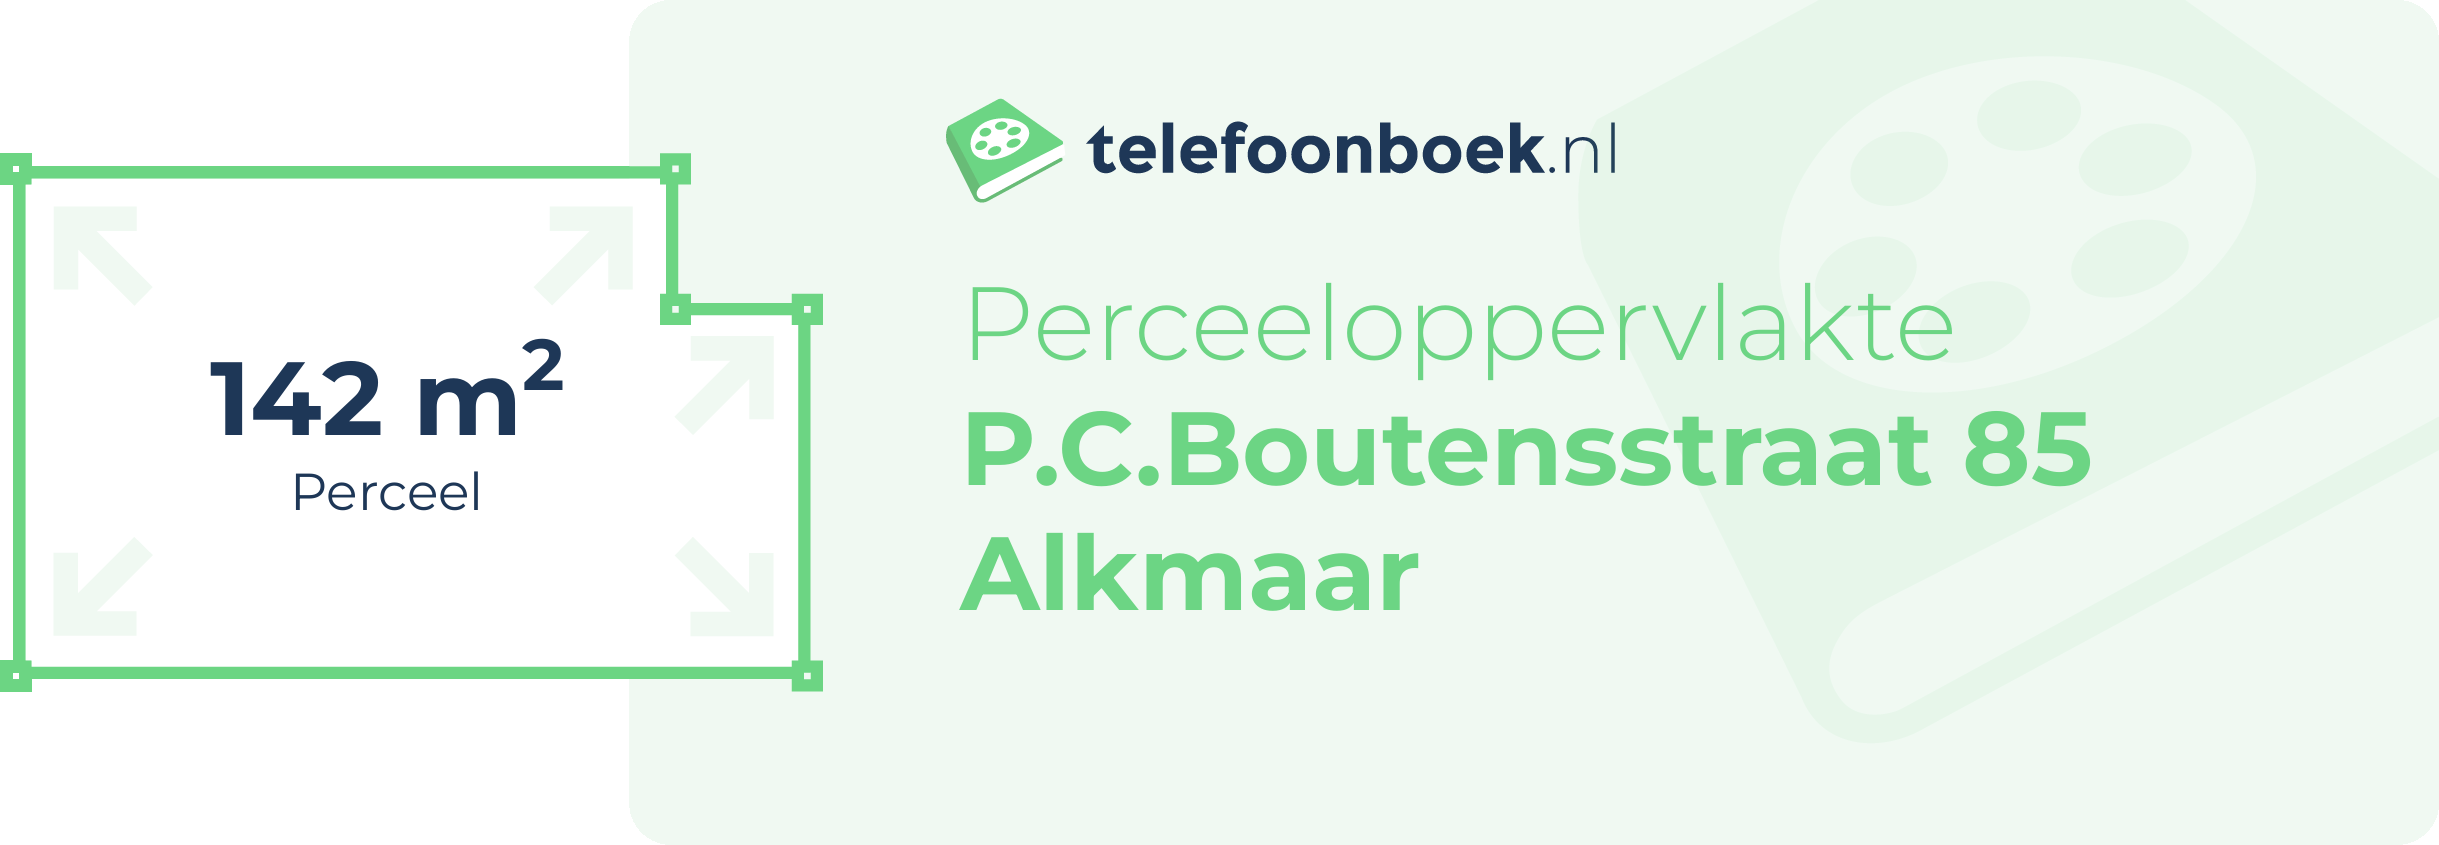 Perceeloppervlakte P.C.Boutensstraat 85 Alkmaar